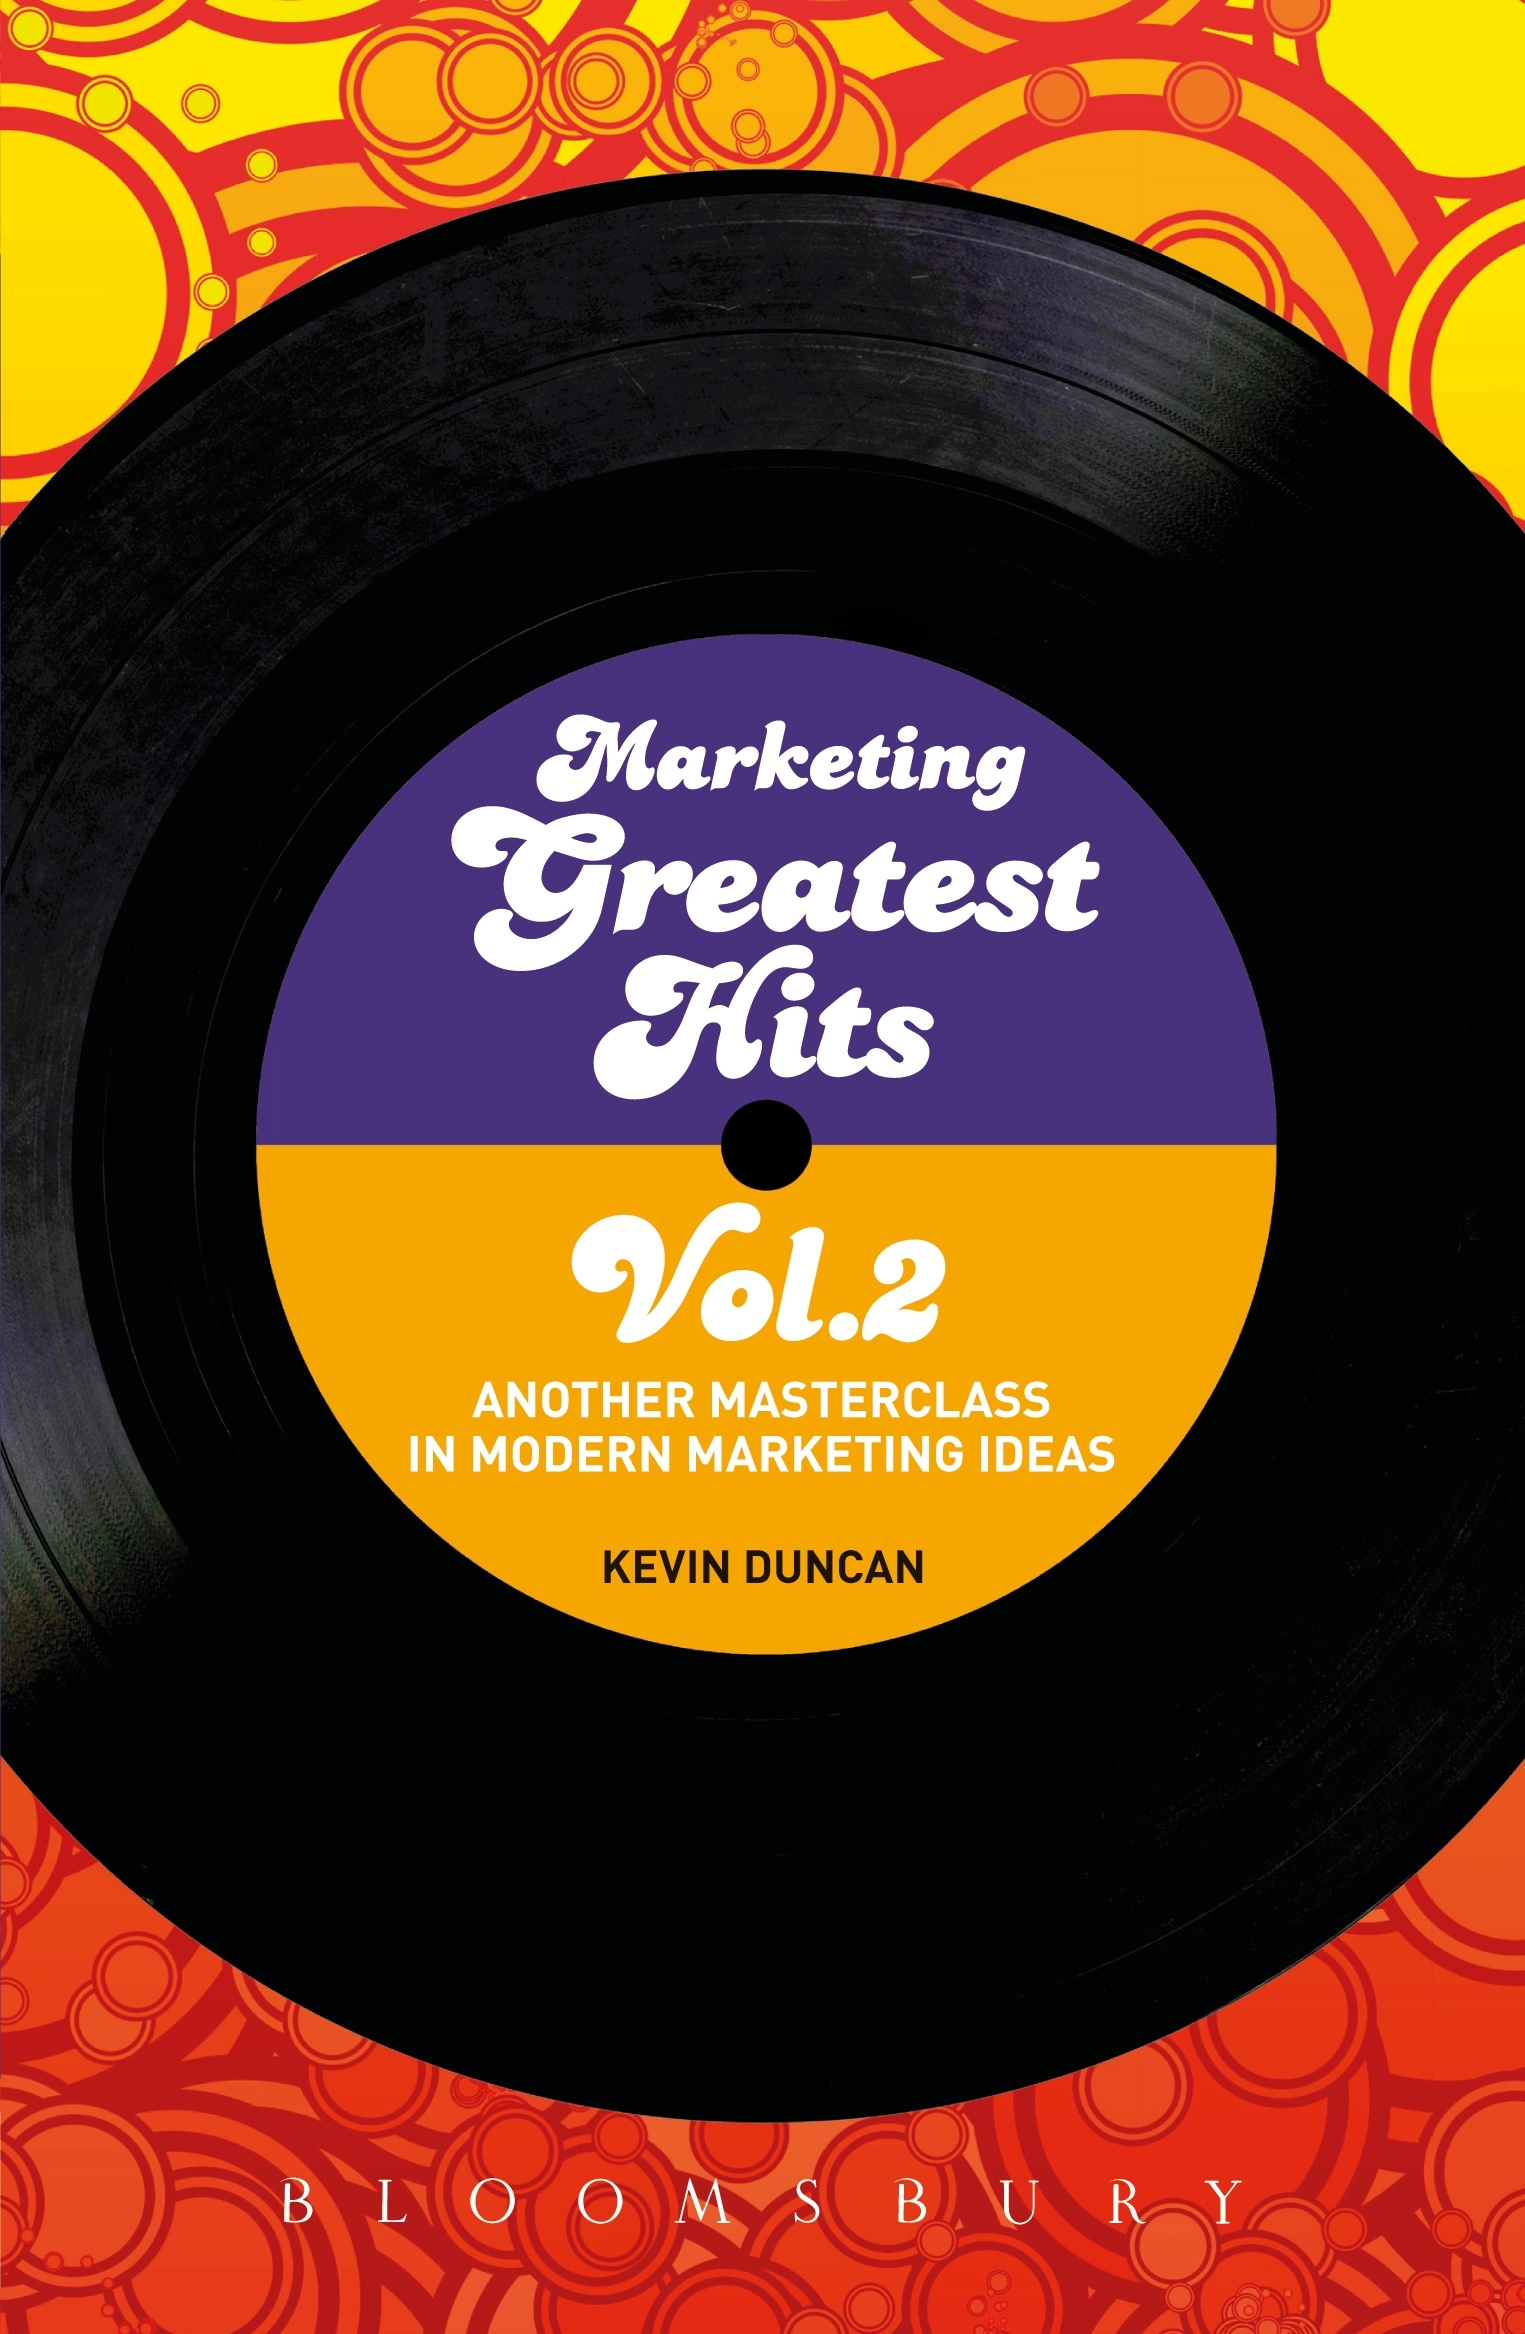 Marketing Greatest Hits Volume 2 - 10-14.99